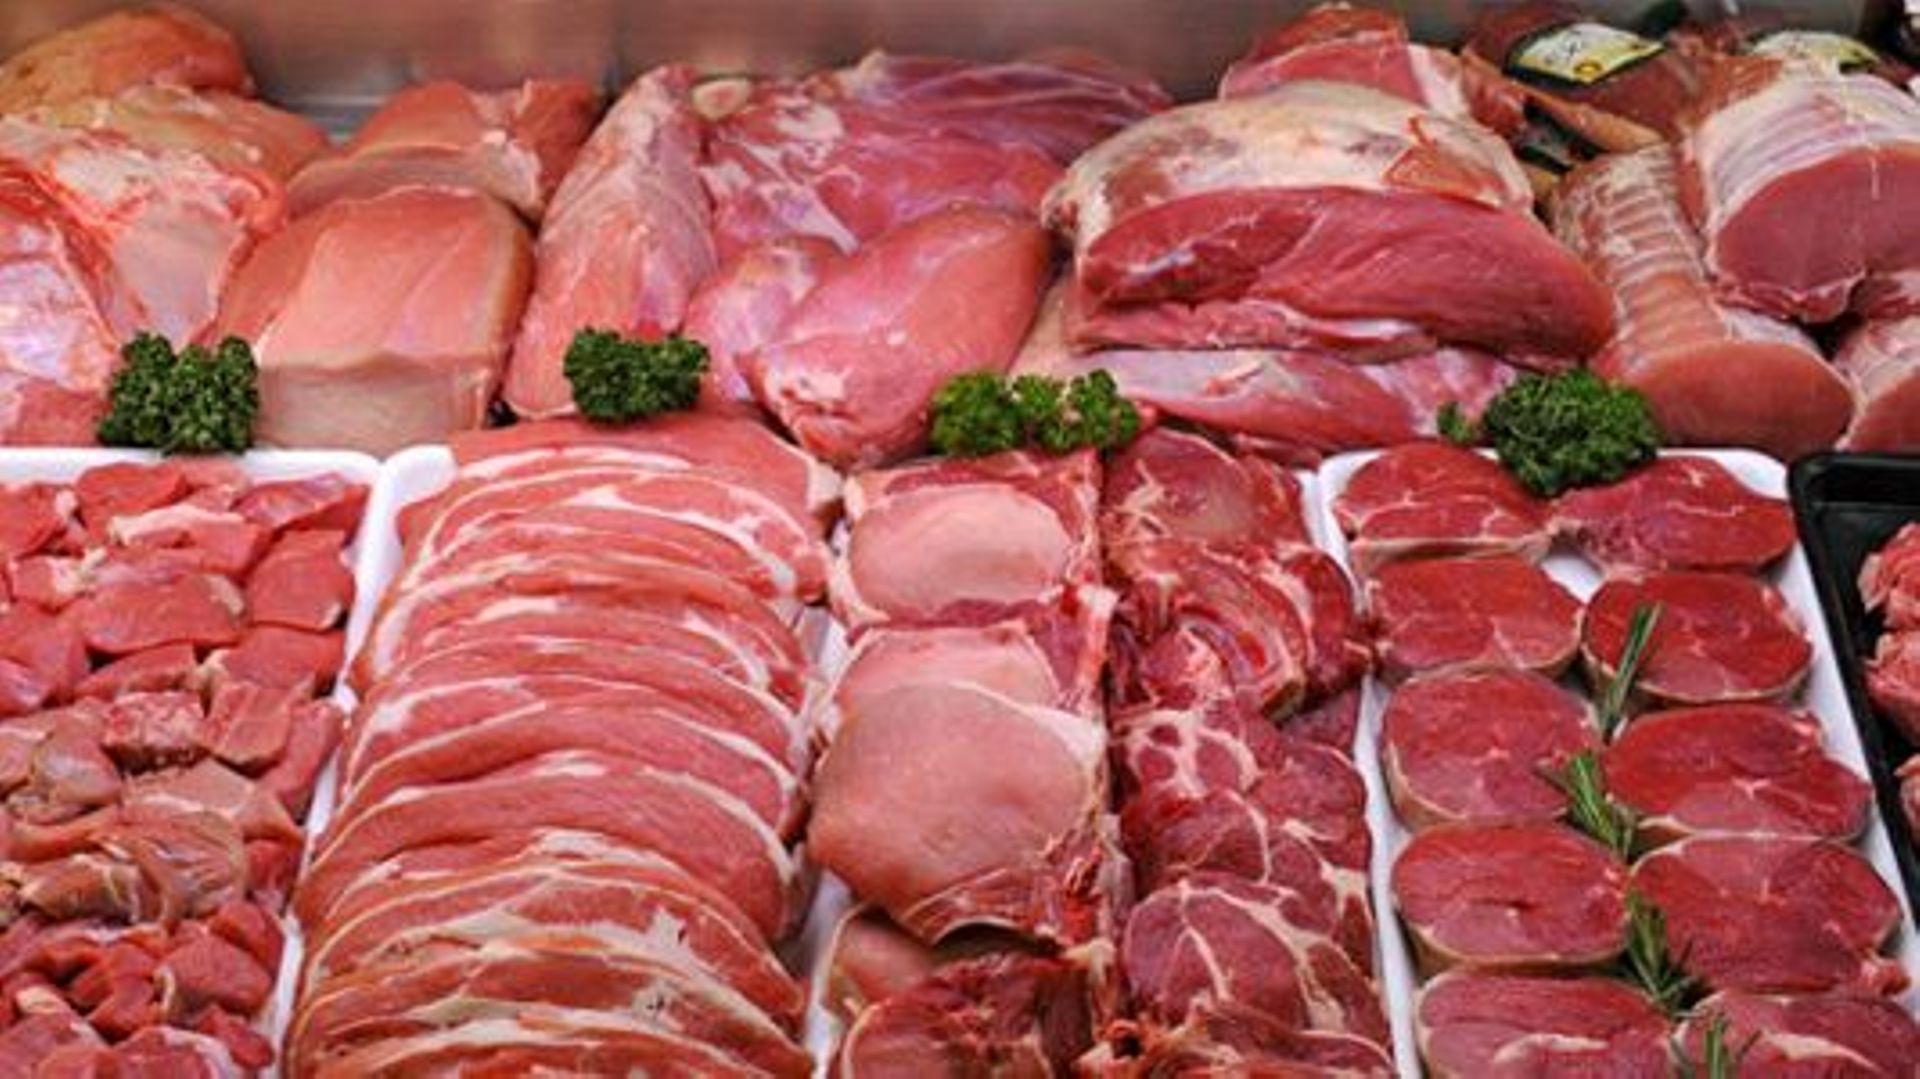 Bilan de la campagne "40 jours sans viande": peu d'impact en Wallonie